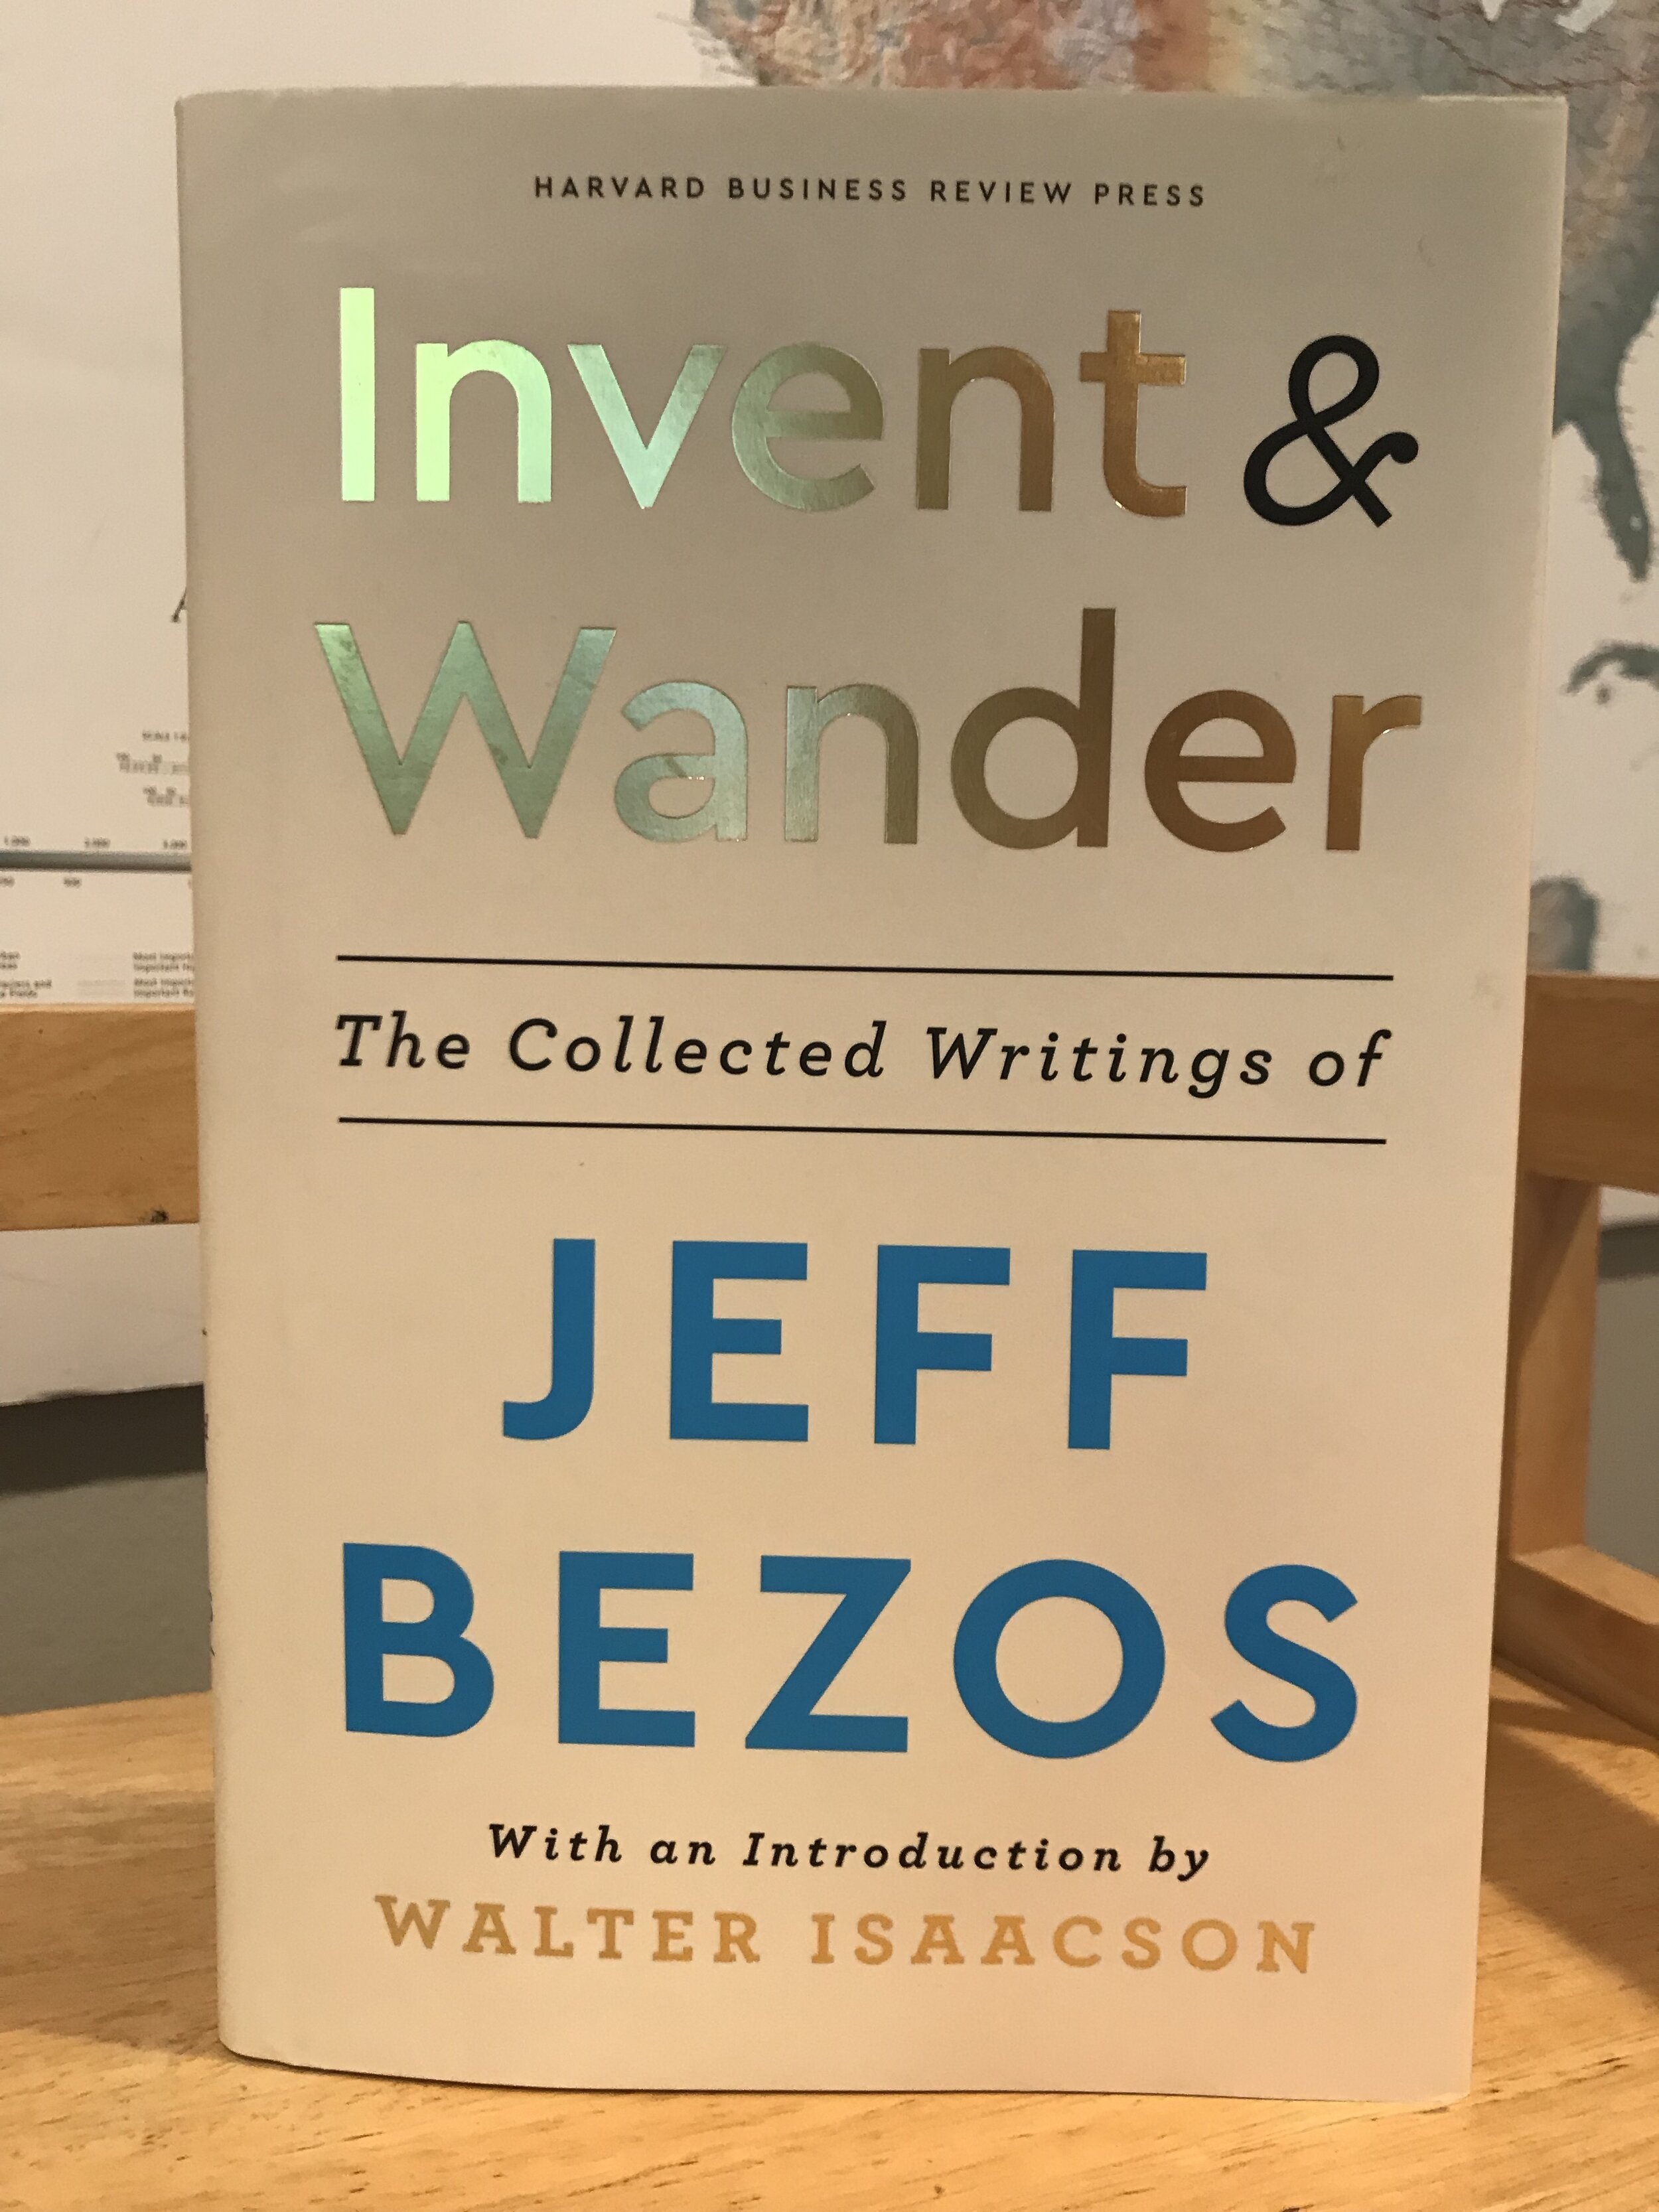 'Invent & Wander' by Jeff Bezos